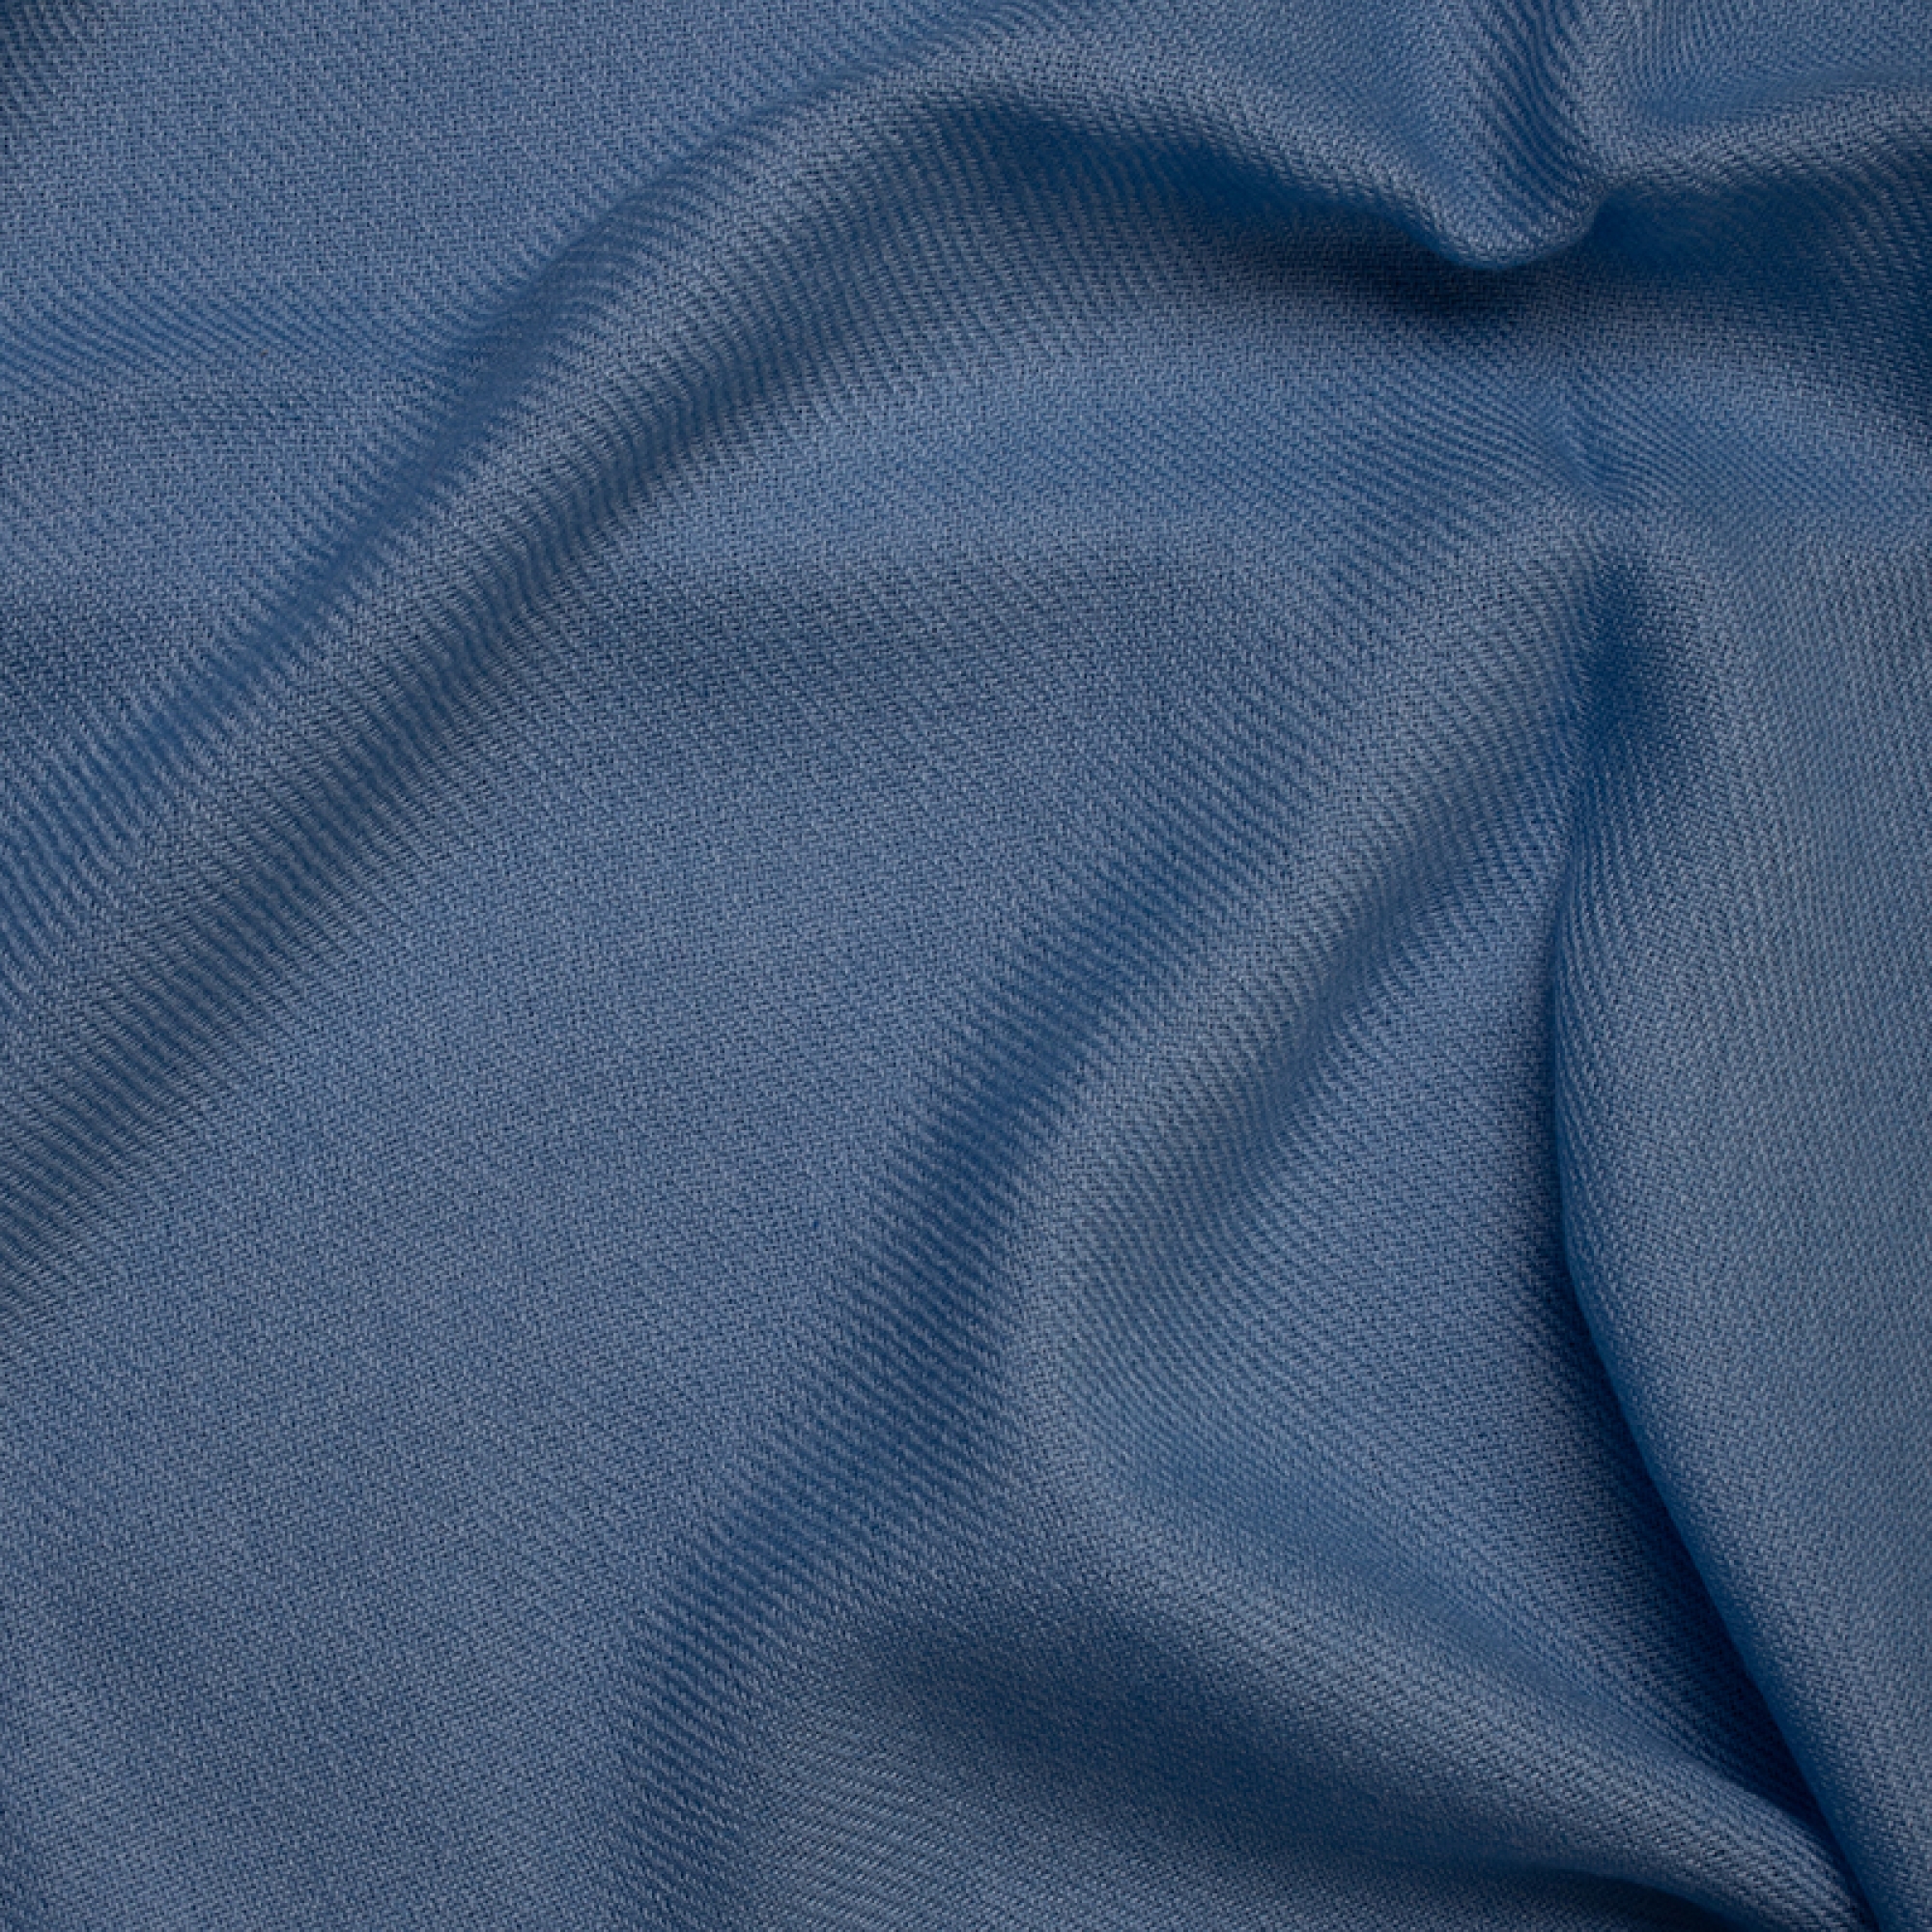 Cashmere accessoires neu toodoo plain xl 240 x 260 azur blau 240 x 260 cm